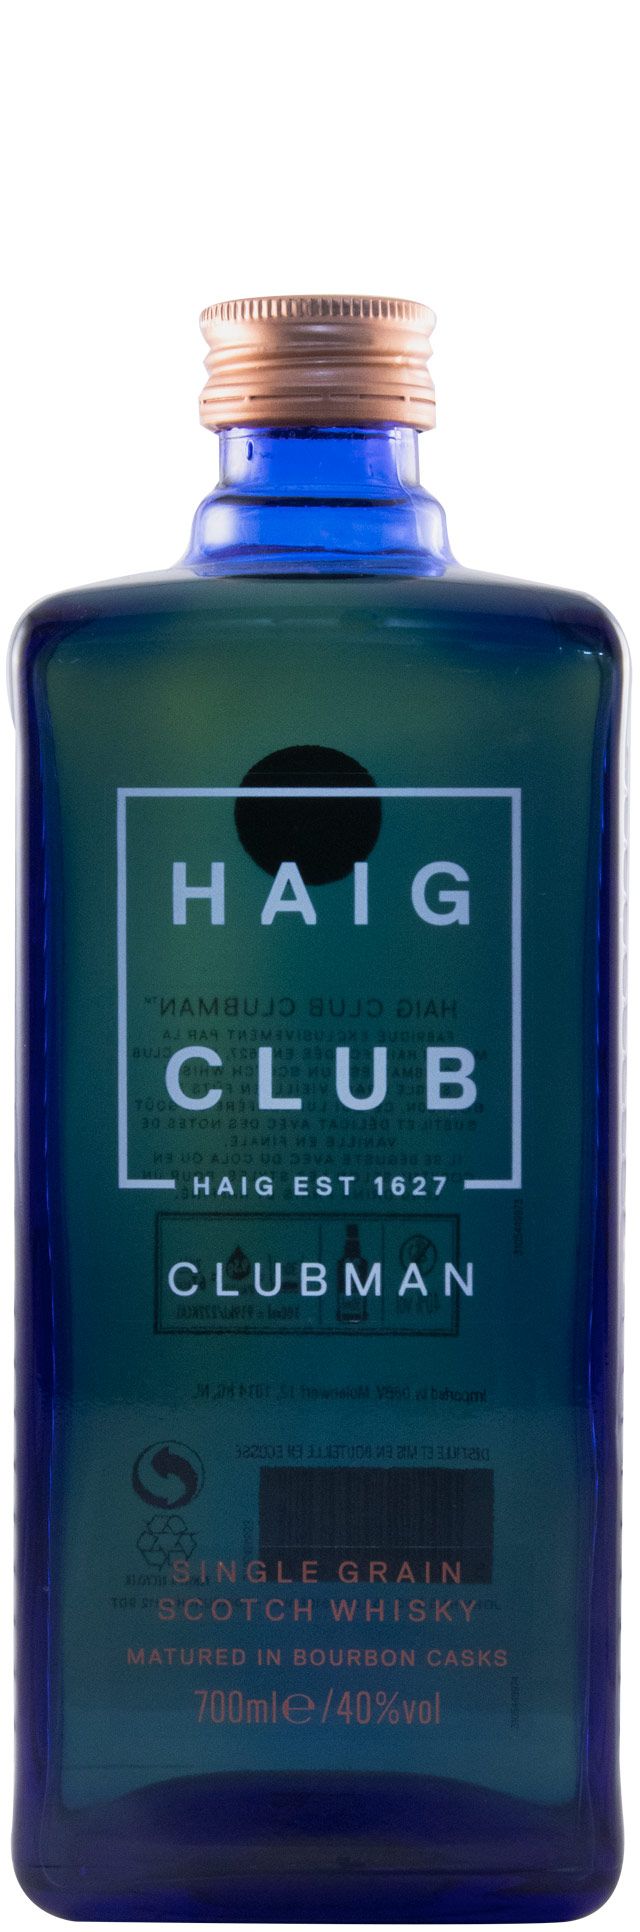 Haig Club by David Beckham